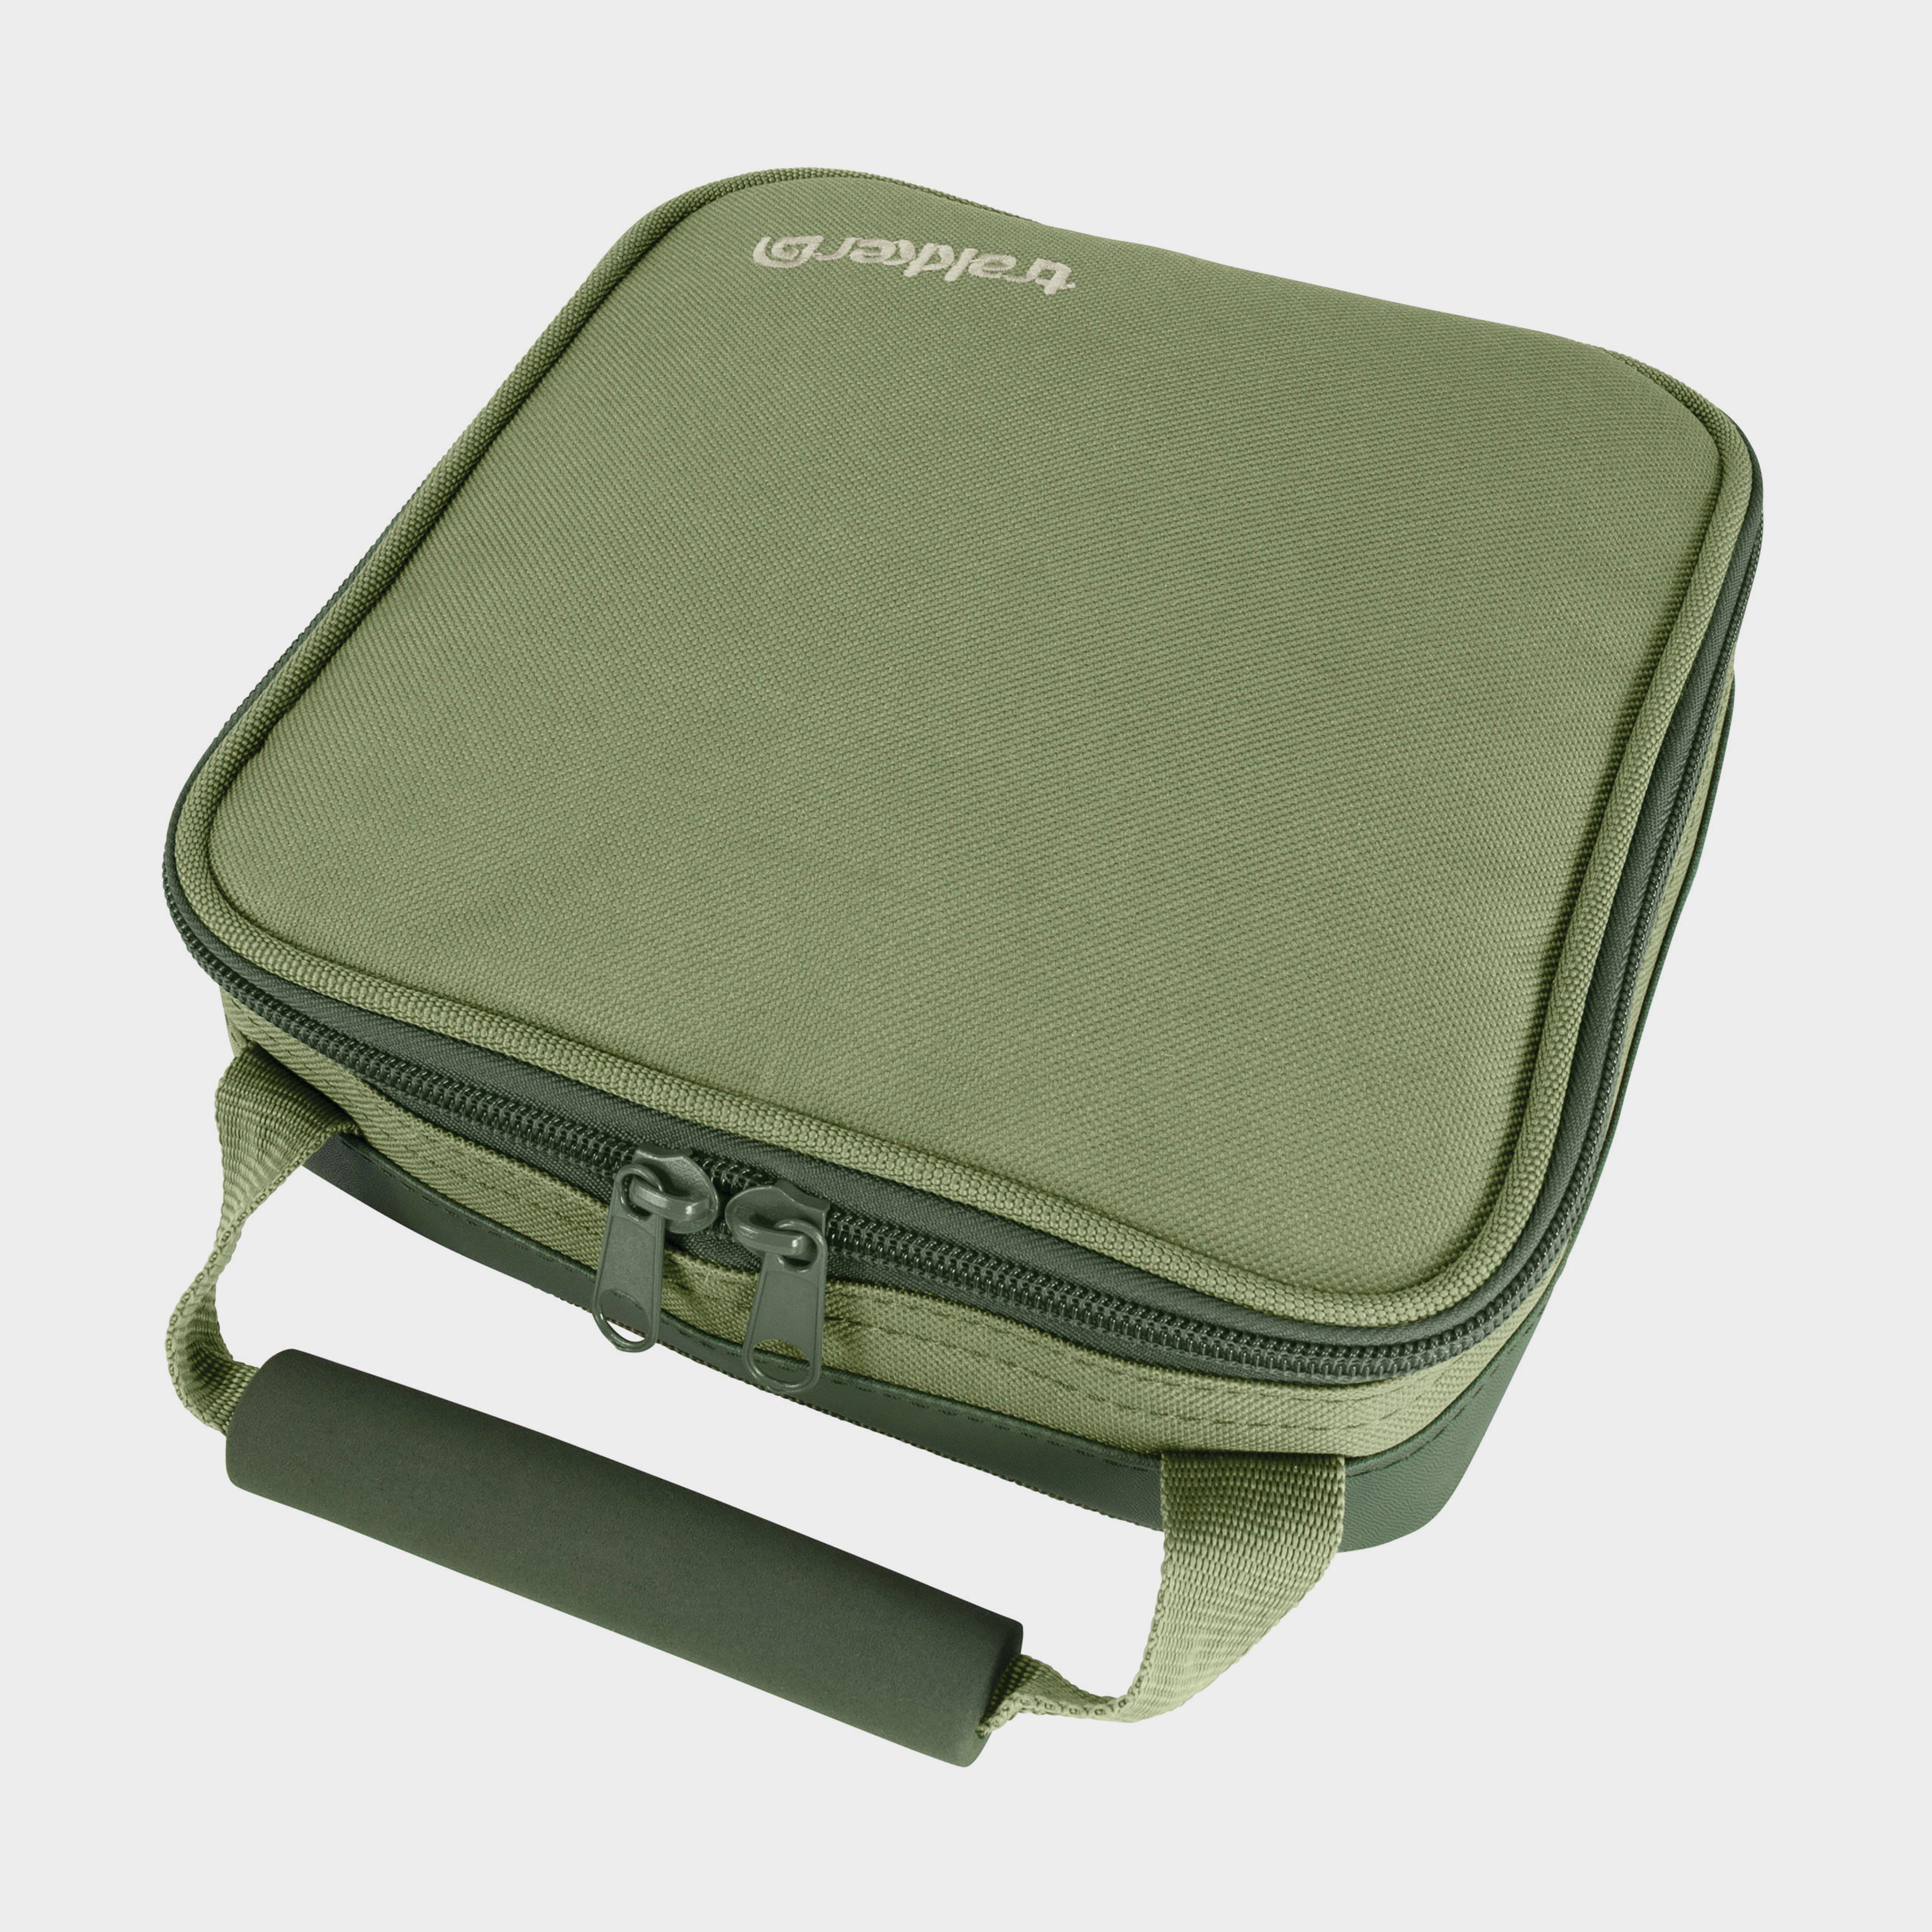  Trakker Nxg Compact Tackle Bag, Green